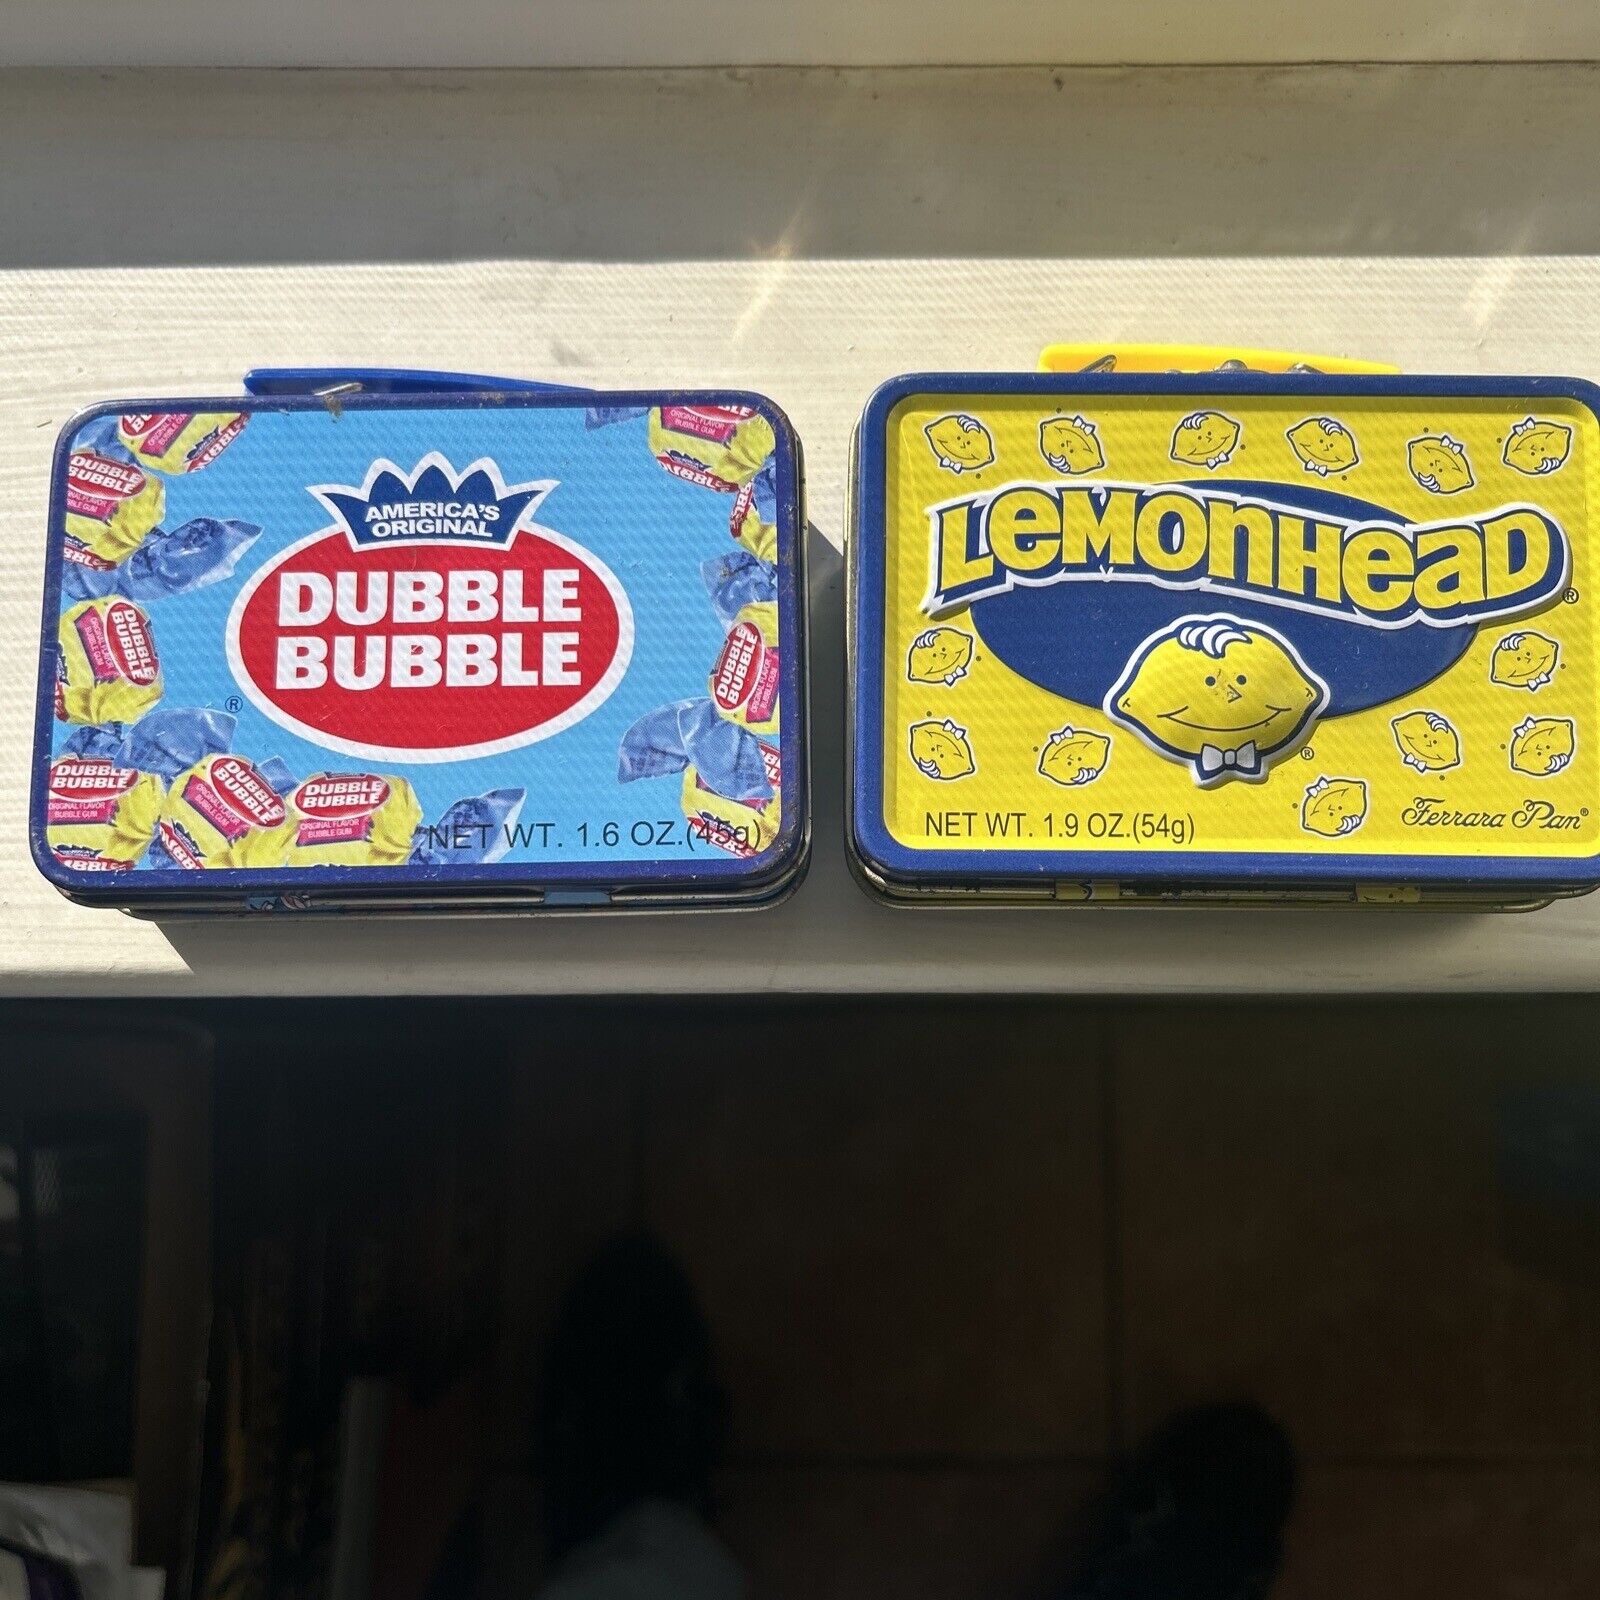 VTG Blue Mini Dubble Bubble Gum Logo Tin Metal Lunch Box/ Lemon Head 4x3x1.5”